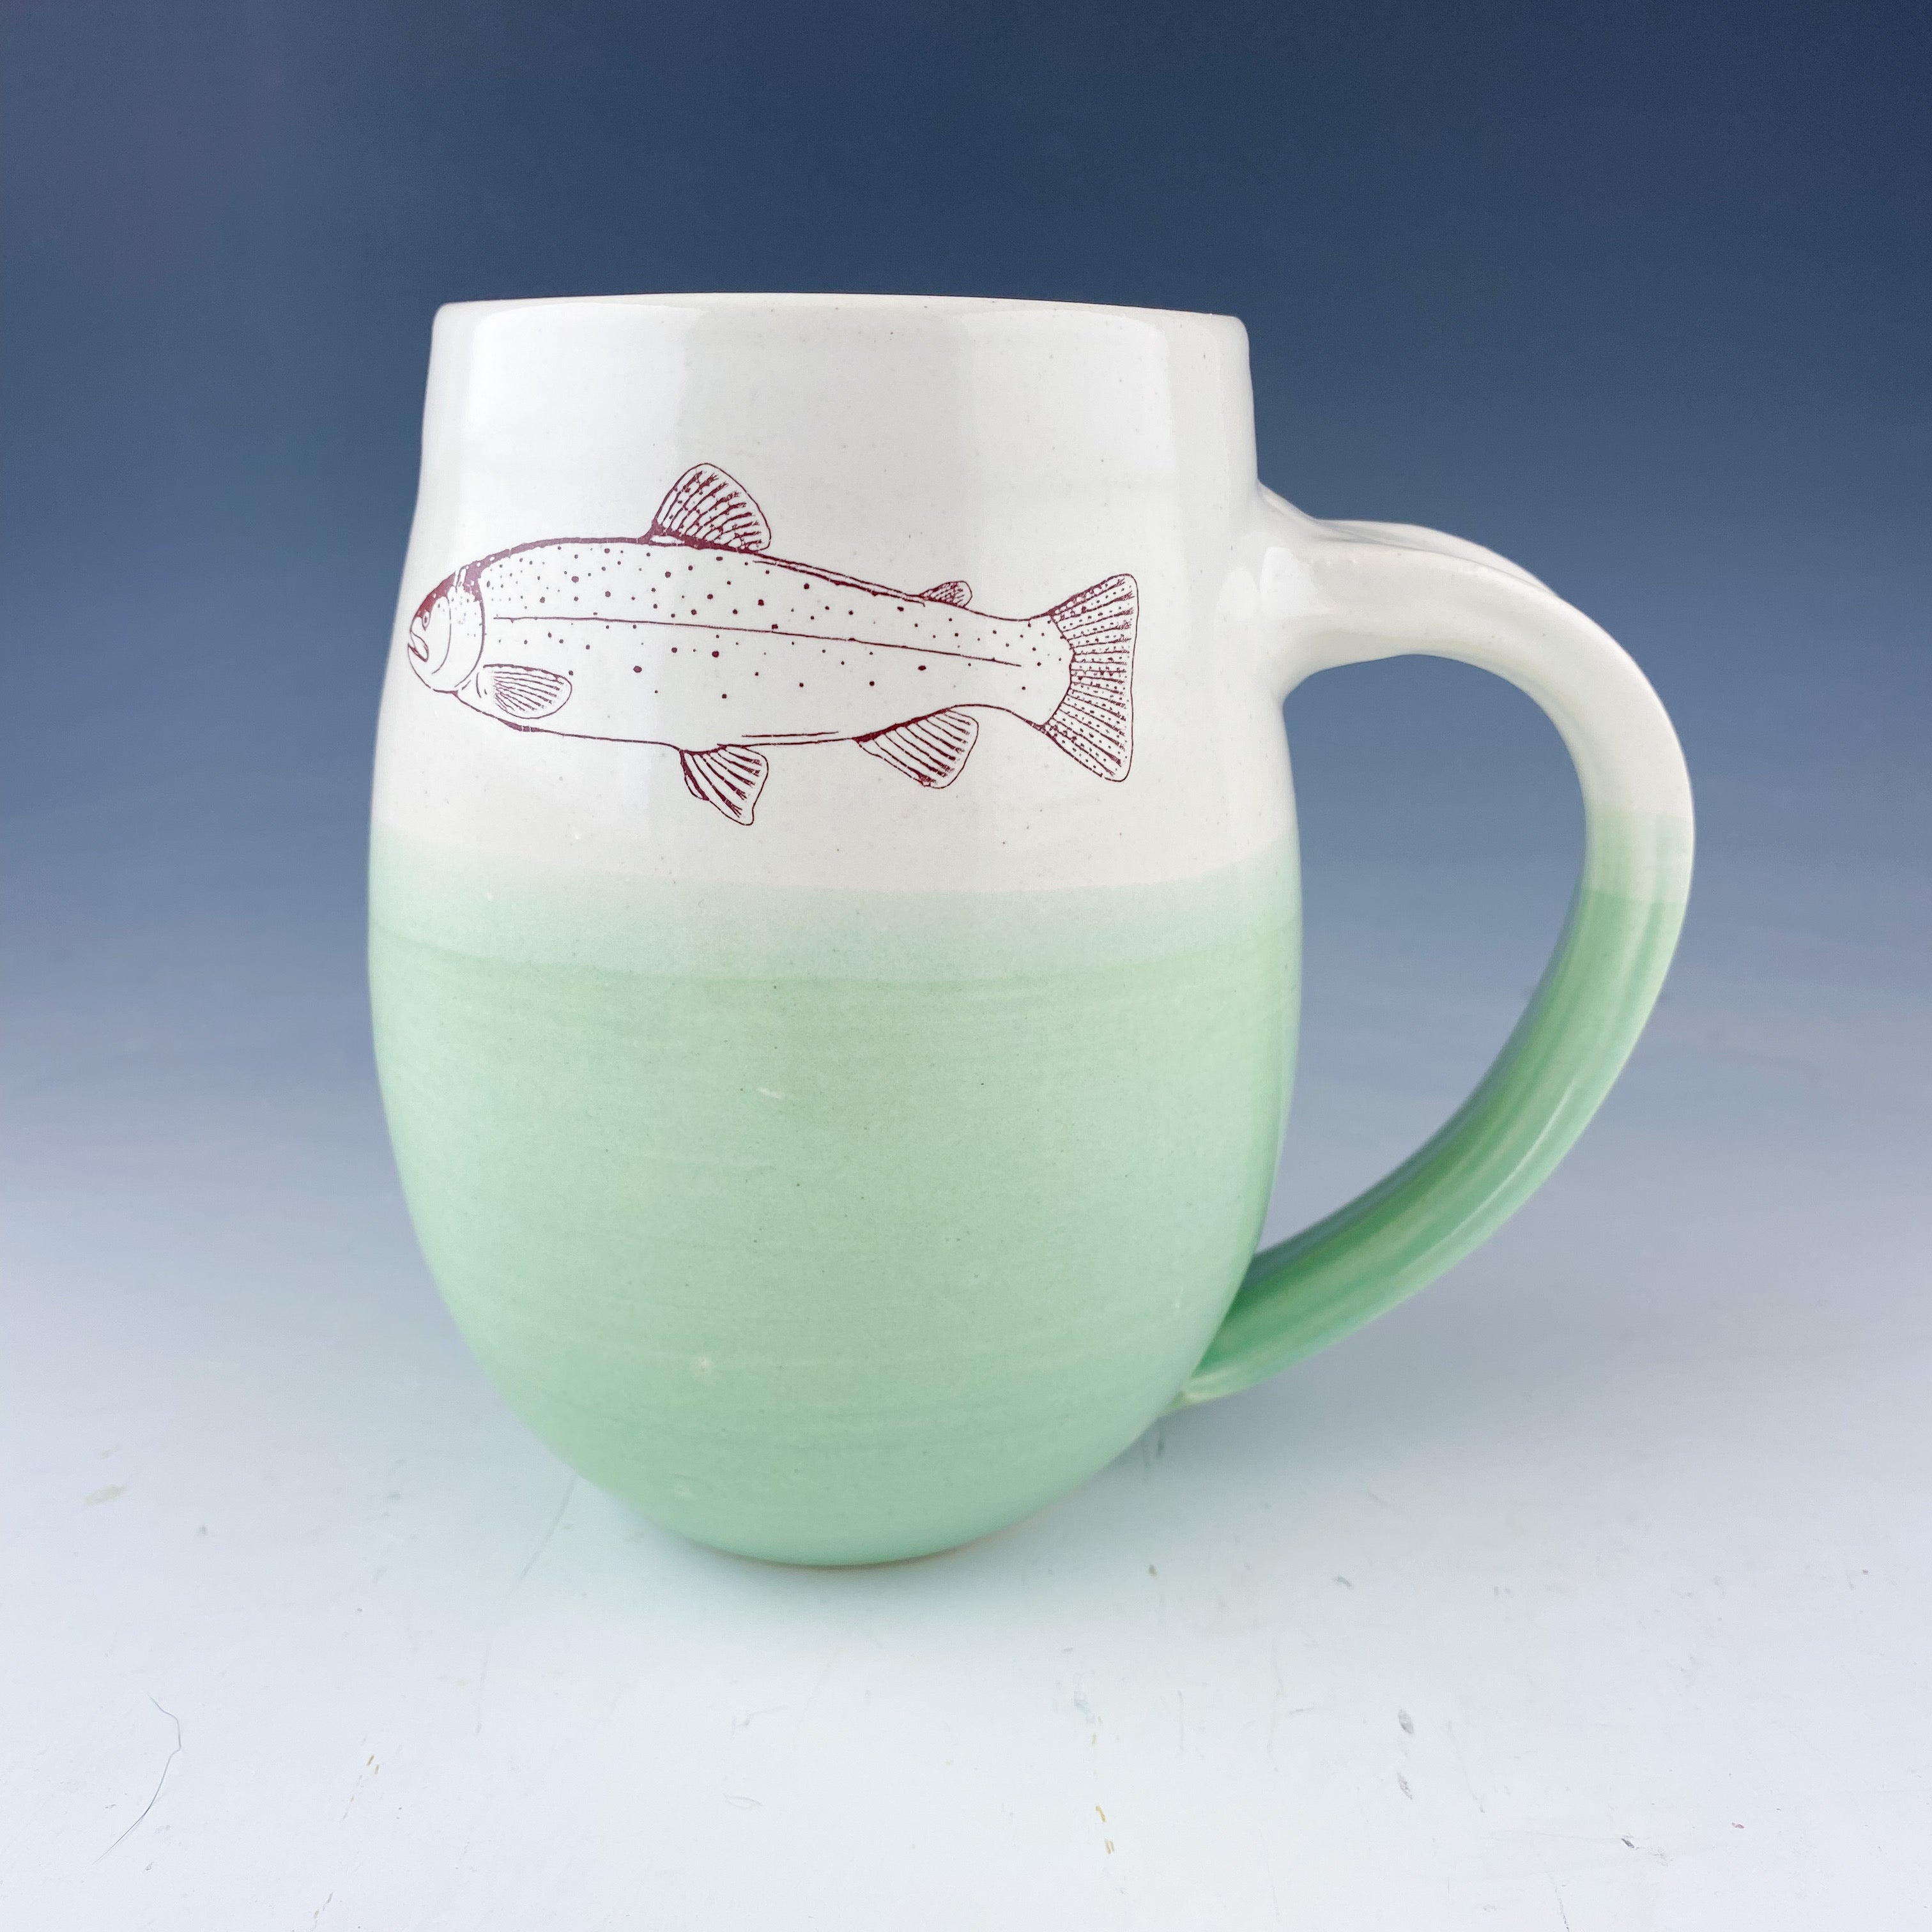 Trout Mug in Aqua and White